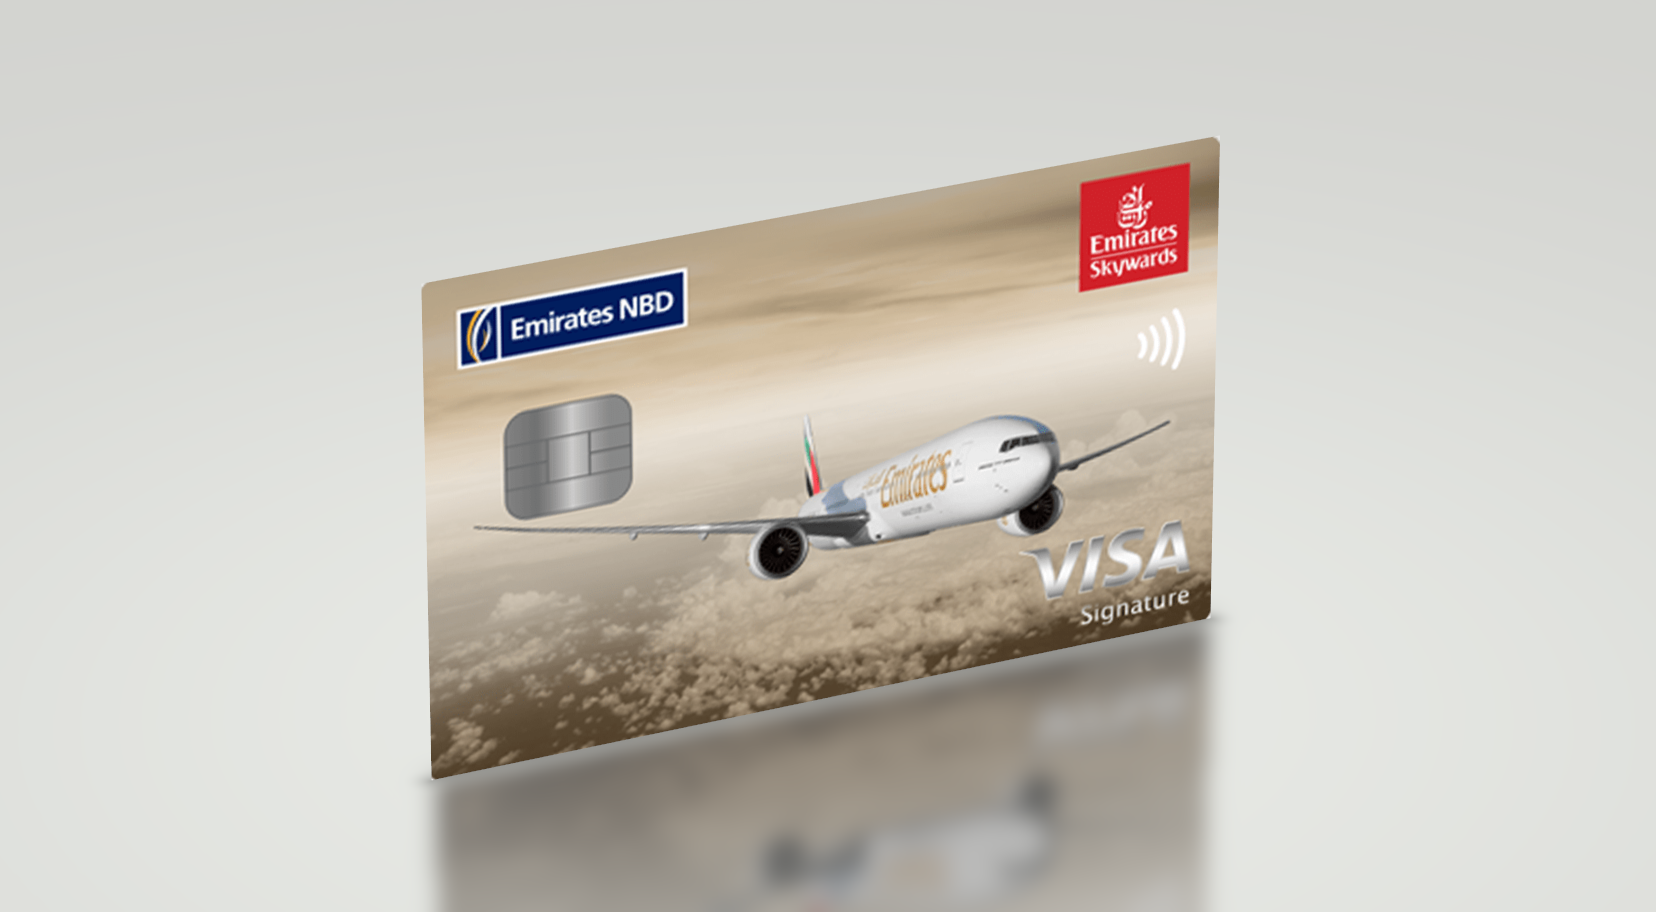 EK-visa-signature-card